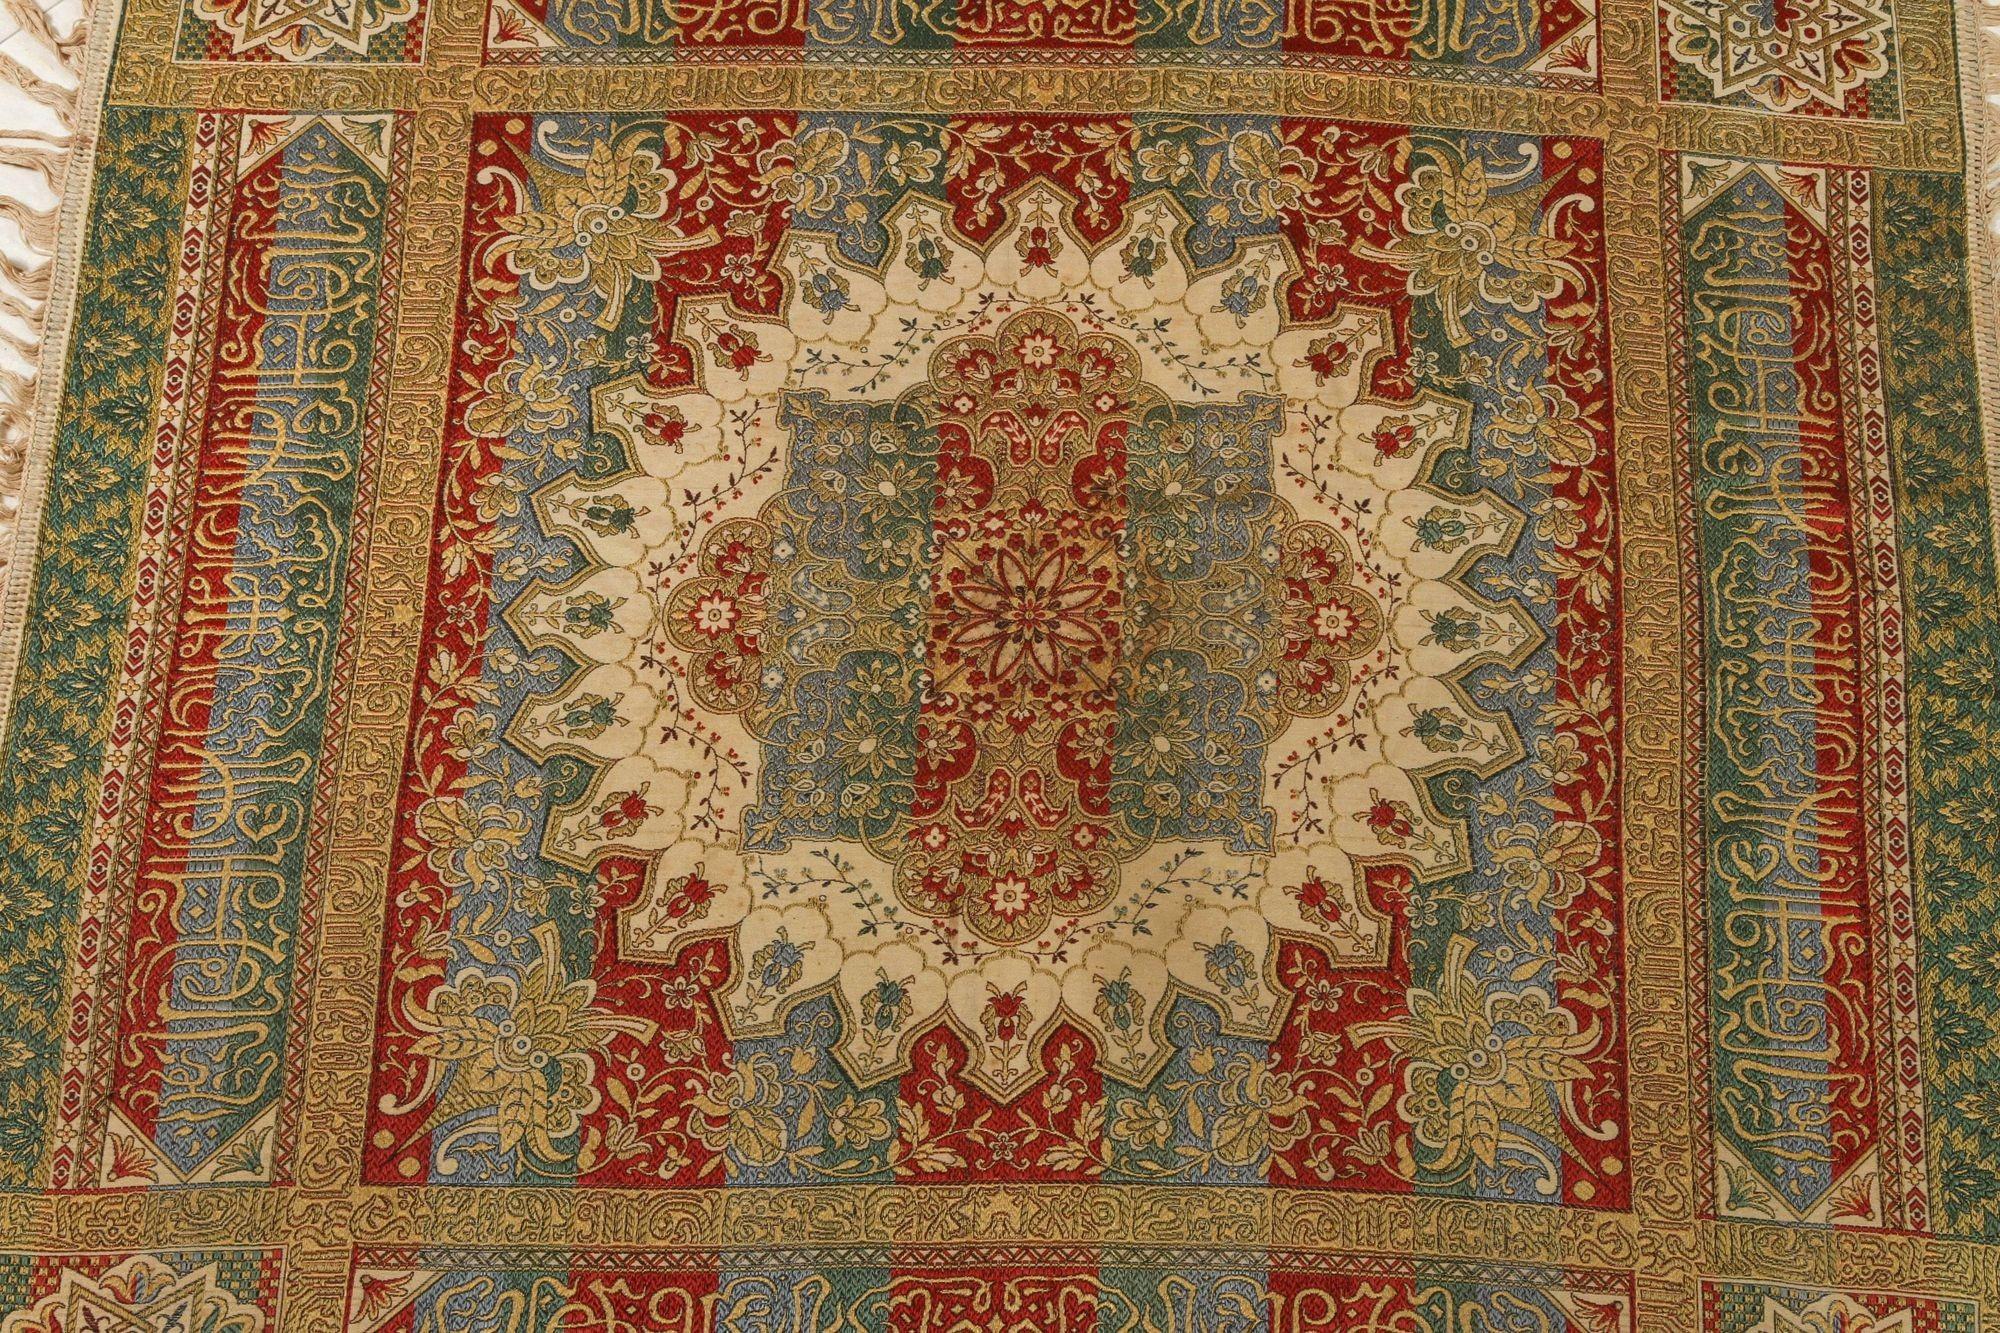 Hand-Crafted 1920s Antique Granada Spain Moorish Islamic Tapestry with Arabic Writing